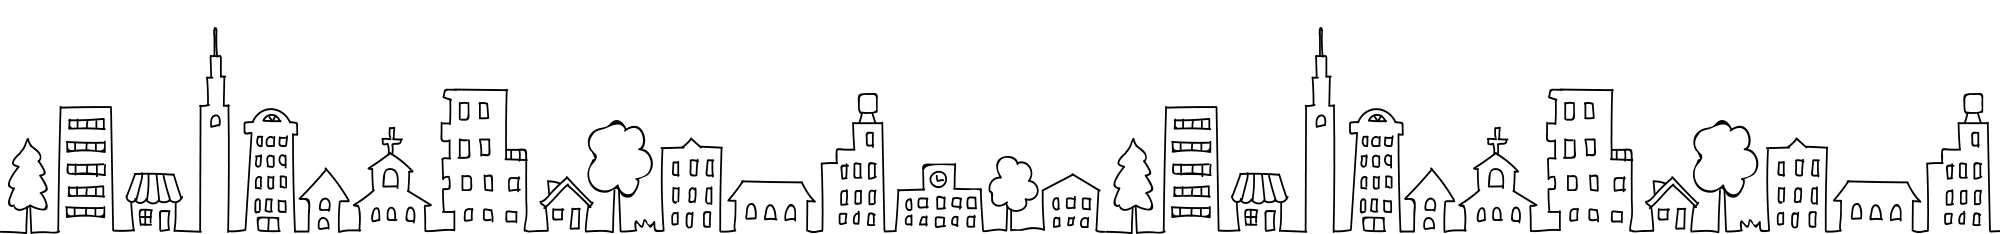 we design life&work